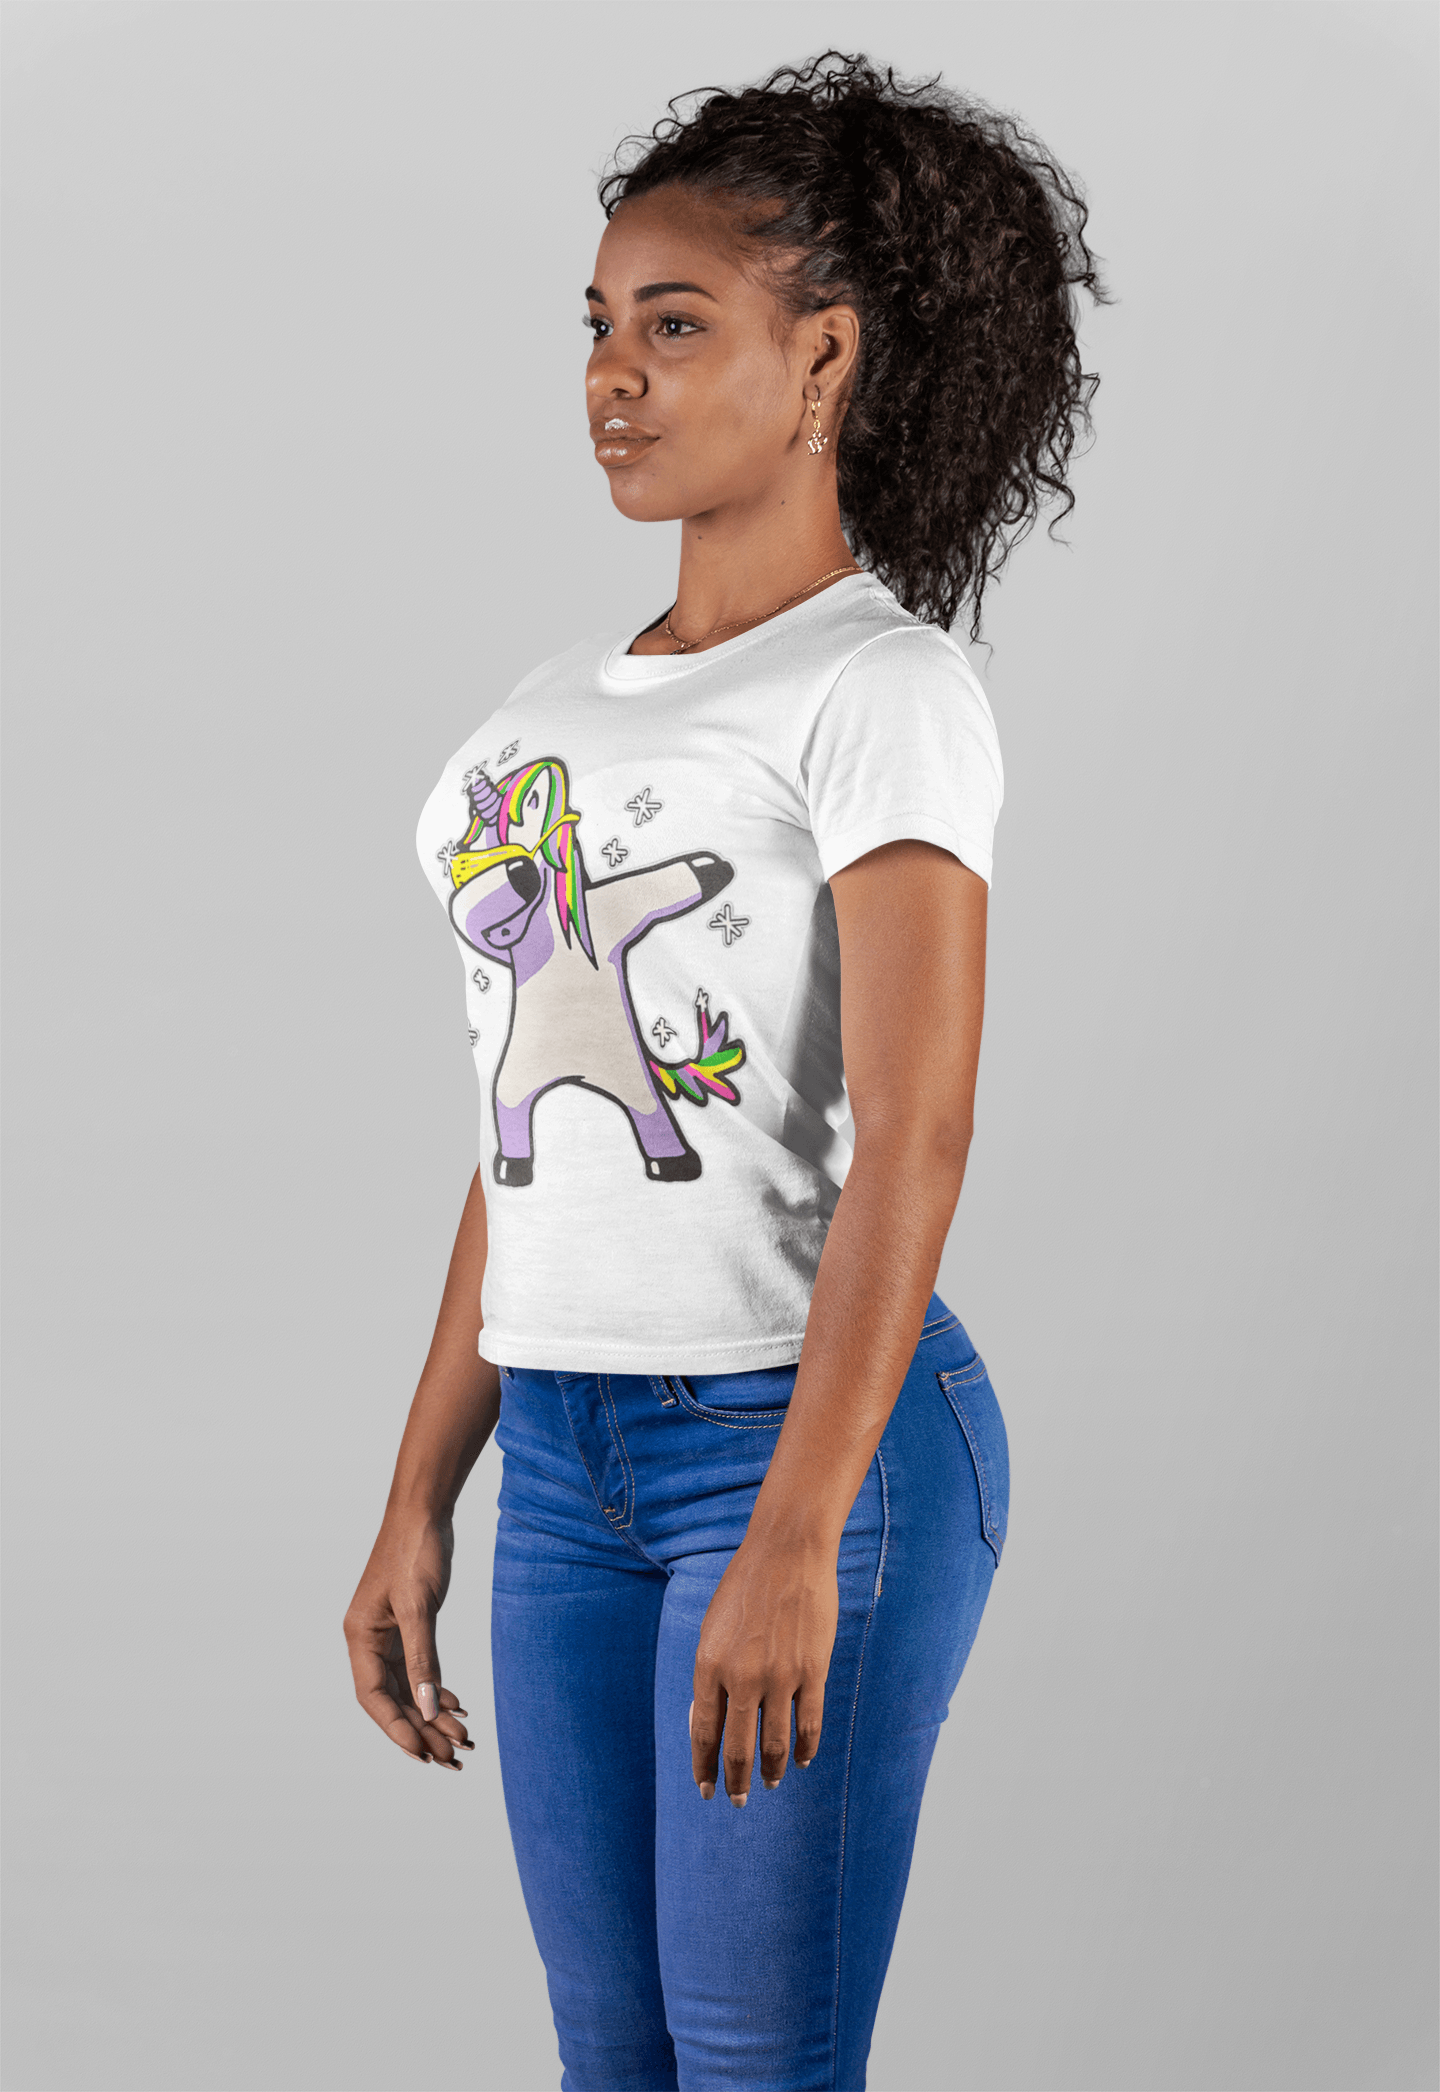 Tic Toc T-shirt Dabbing Rainbow Unicorn Short Sleeve Unisex Top - TopKoalaTee